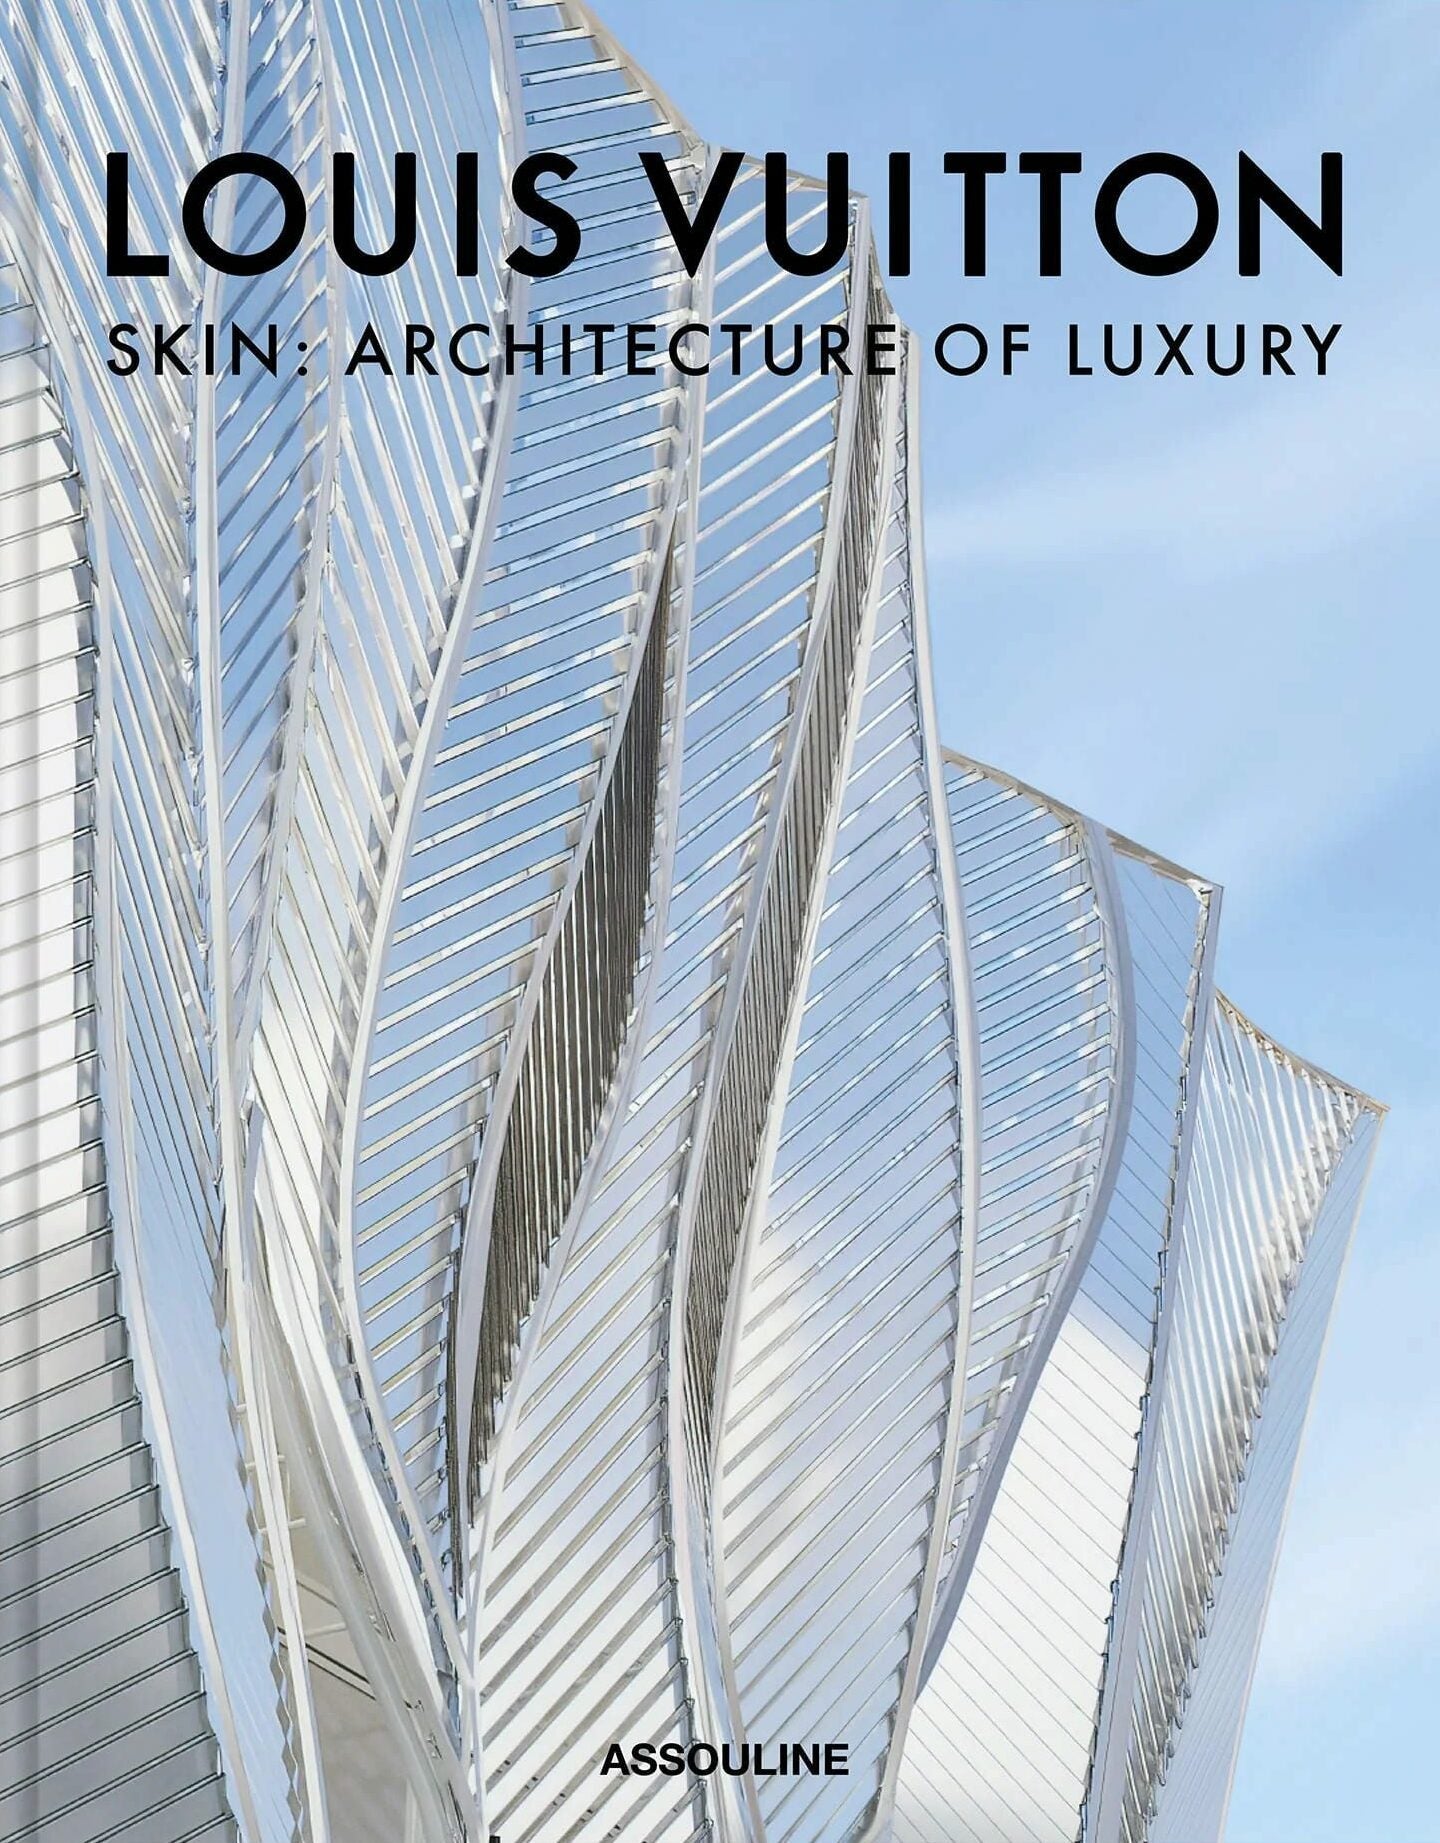 Empty Vase - Book - Louis Vuitton Manufactures - By Assouline